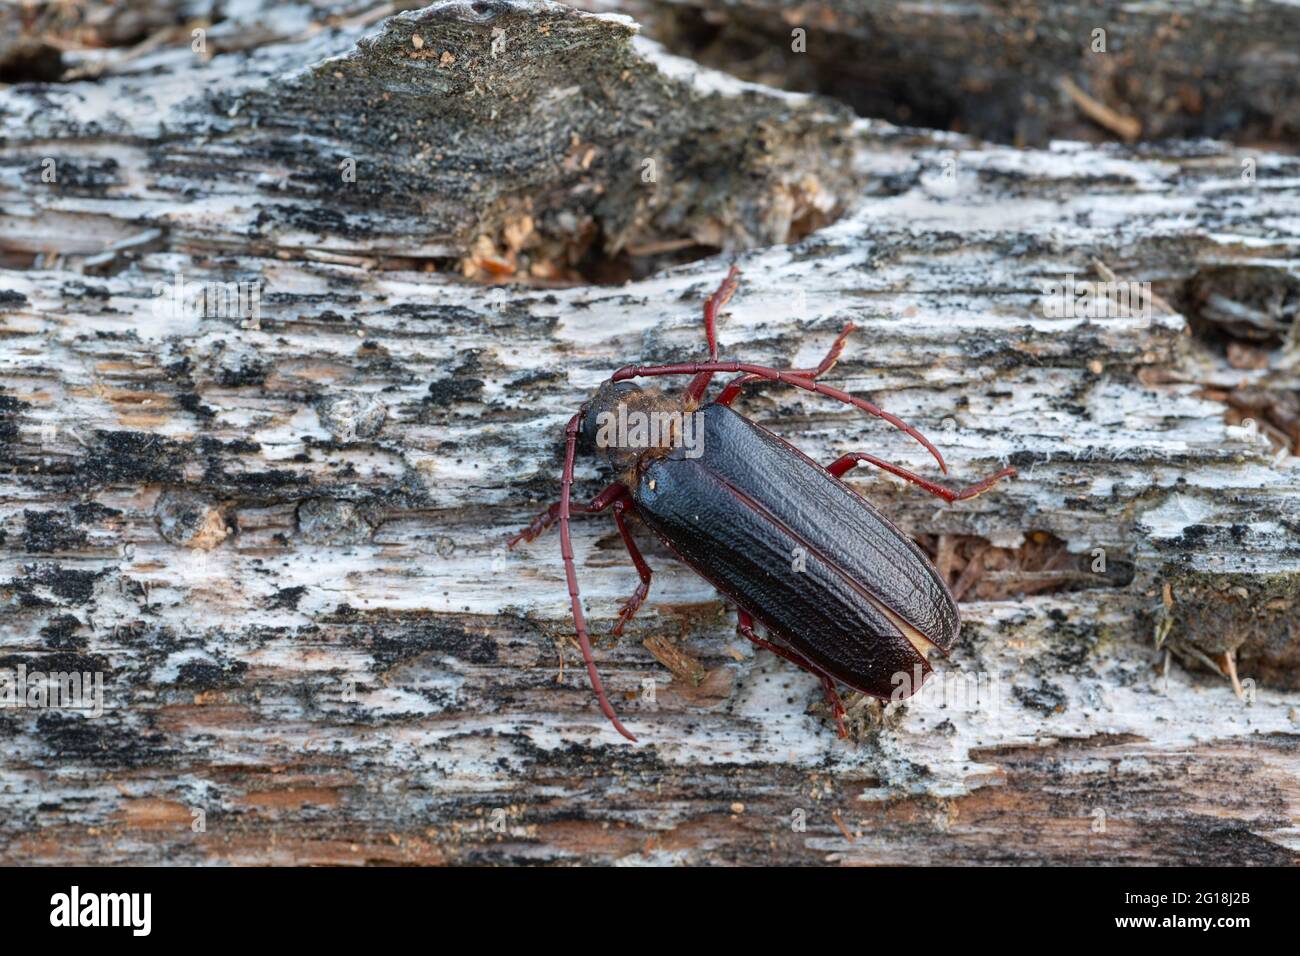 Longhorn beetle Tragosoma depsarium on decaying pine wood Stock Photo